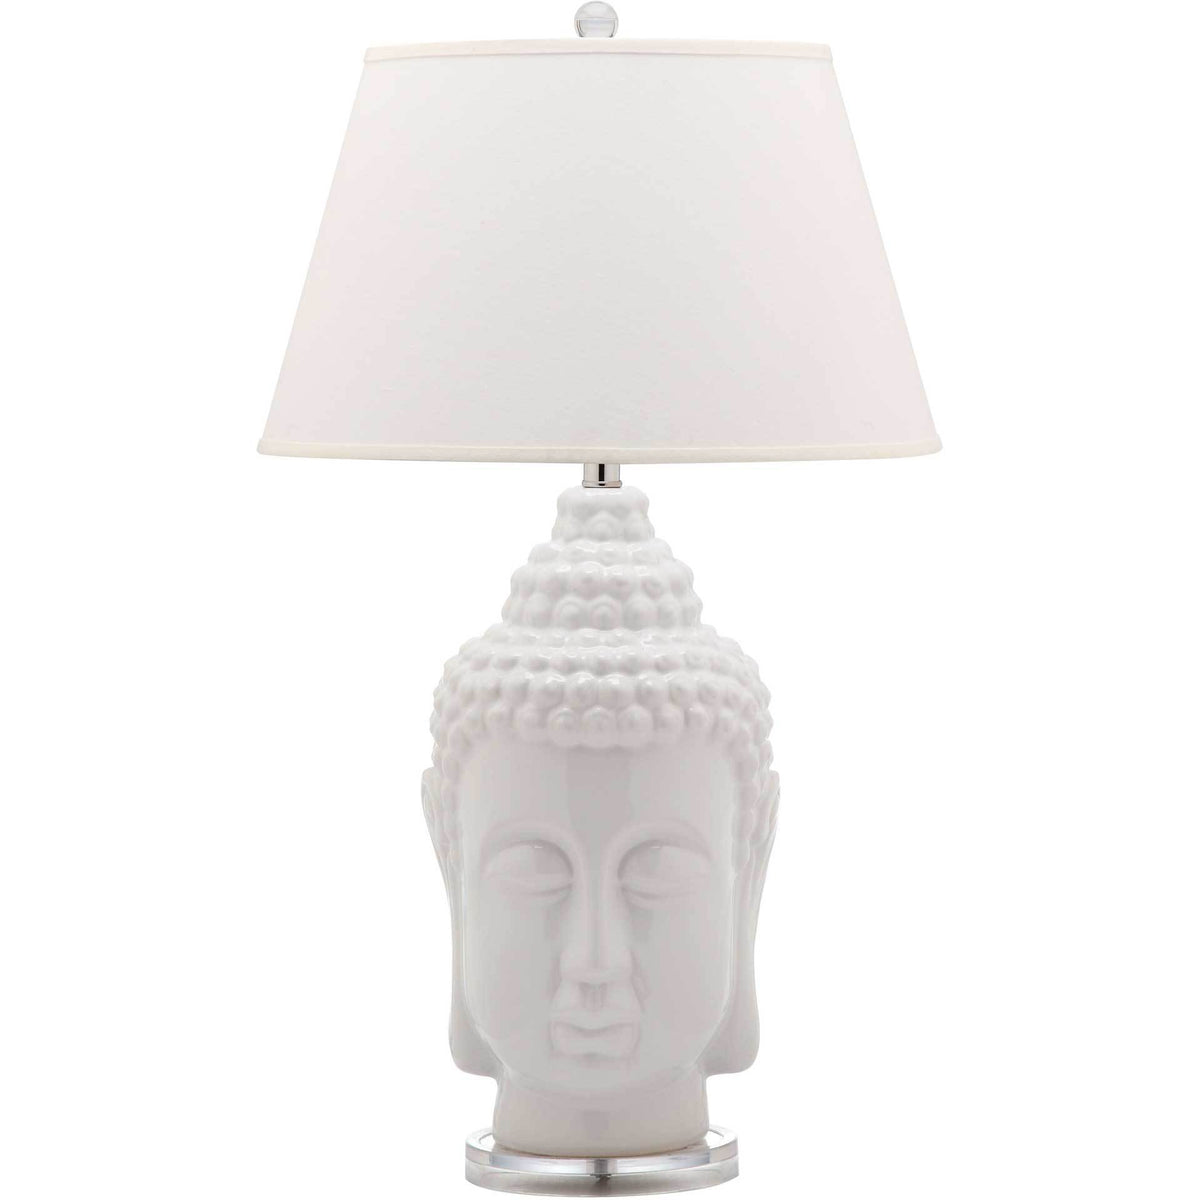 Sean Buddha Table Lamp White (Set of 2)